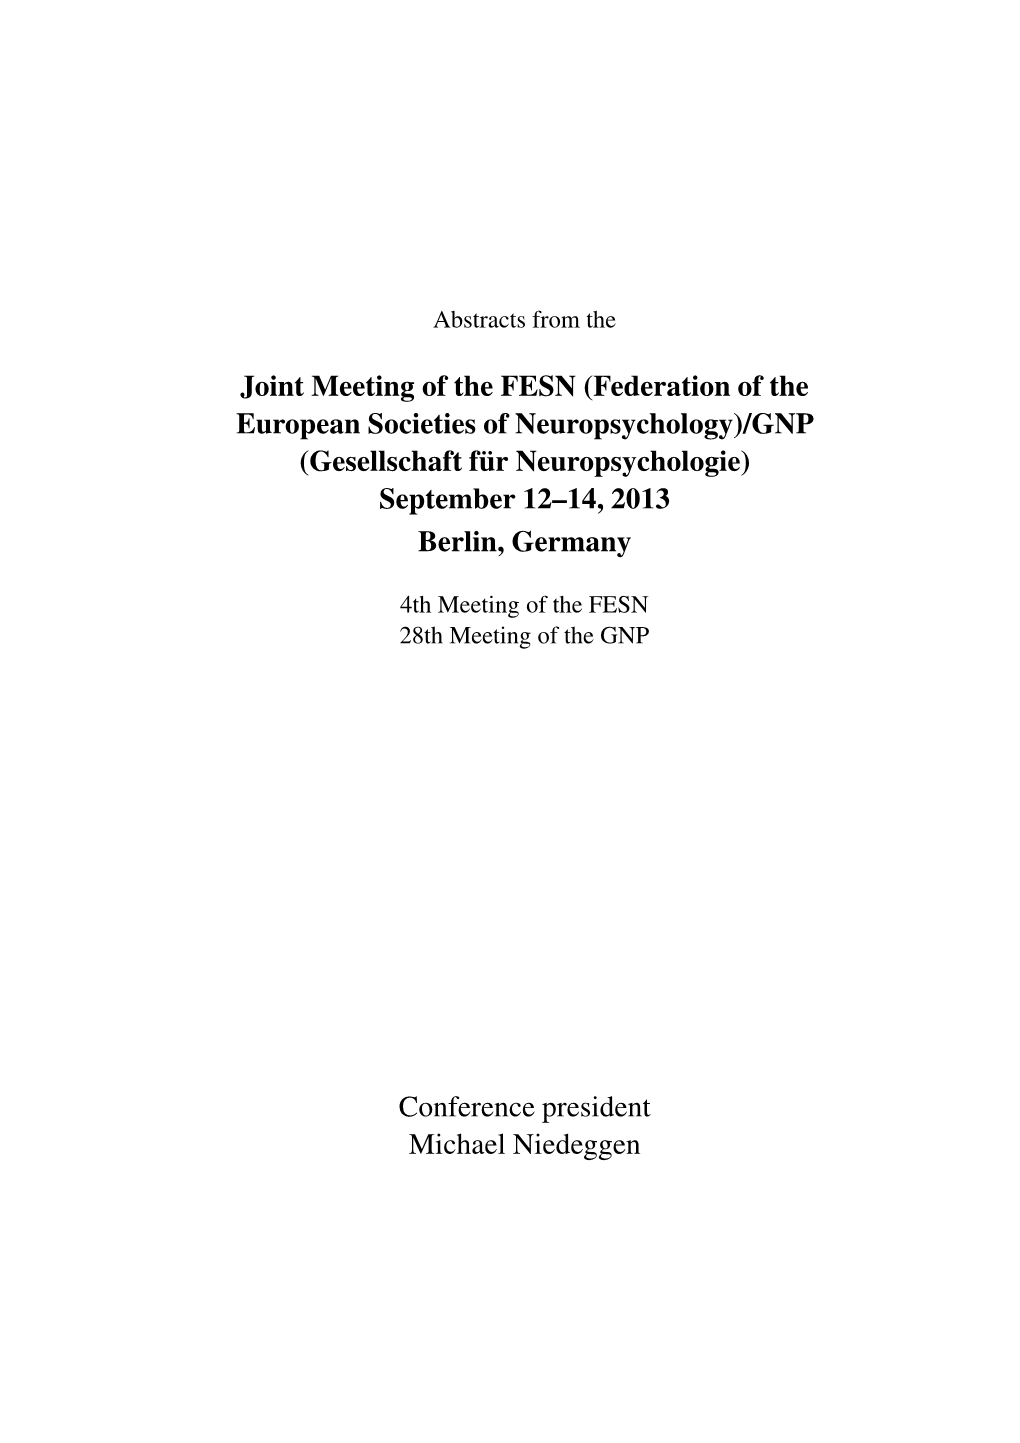 Federation of the European Societies of Neuropsychology)/GNP (Gesellschaft Fur¨ Neuropsychologie) September 12–14, 2013 Berlin, Germany